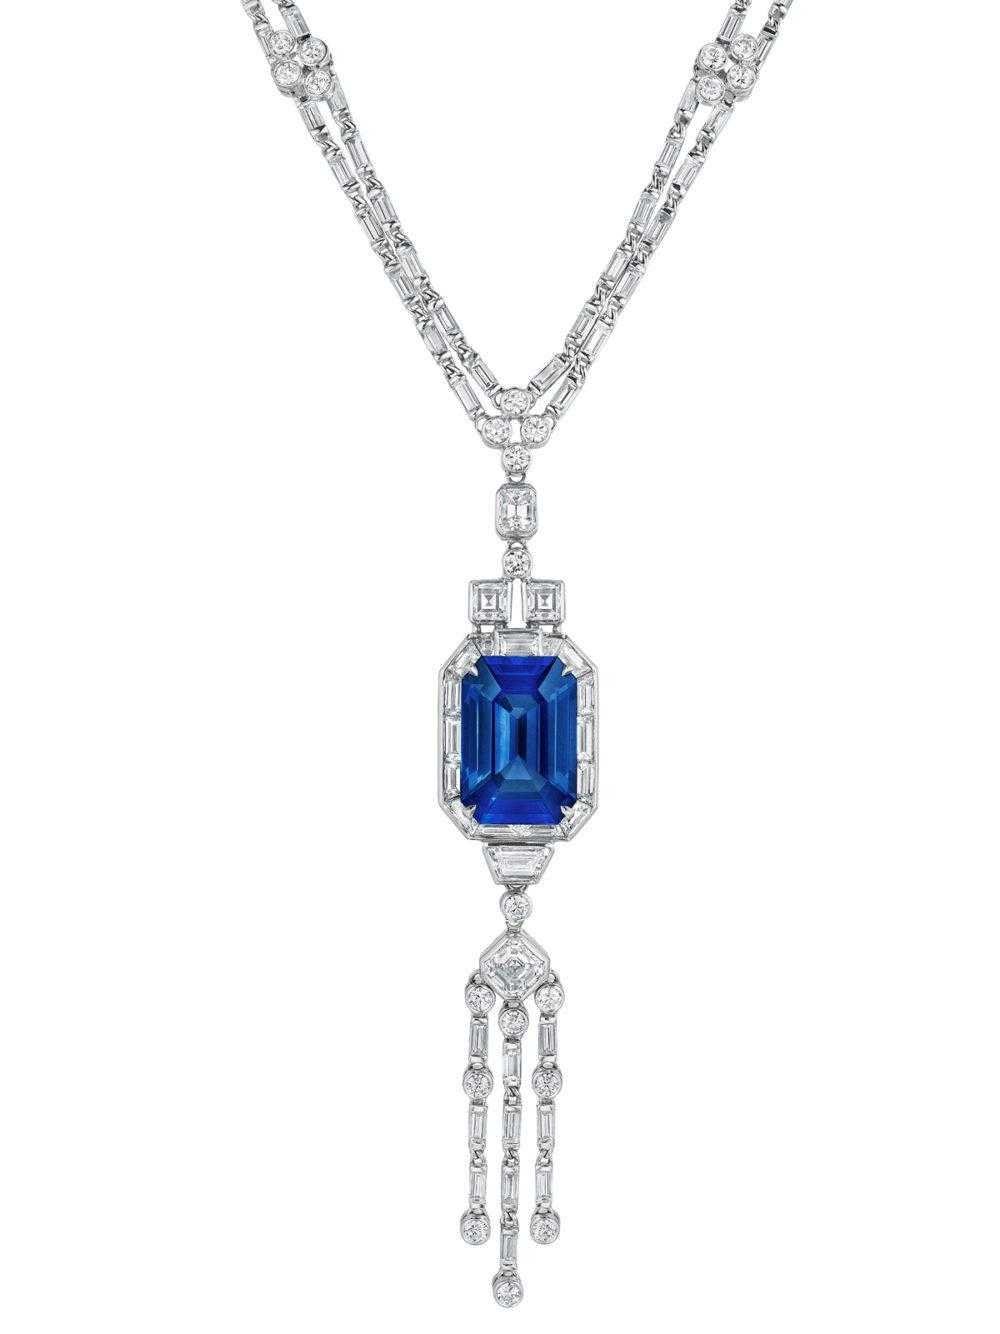 extraordinary-ceylon-sapphire-diamond-necklace-high-end-jewelry-luxury-jewelry-hammerman-jewels